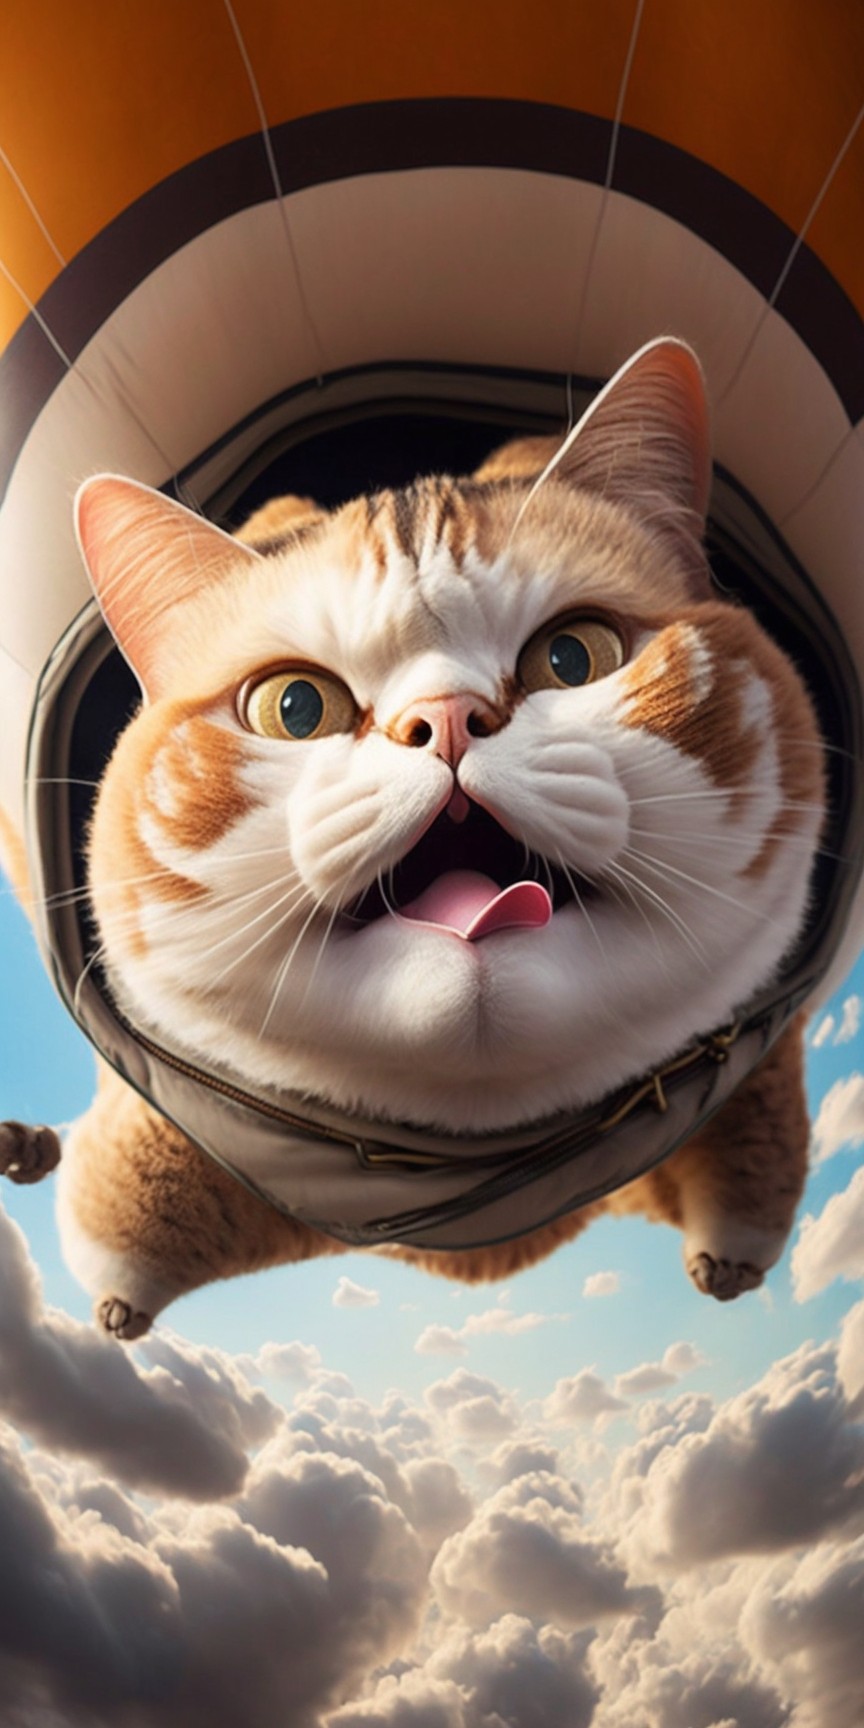 Parachute kitten falling from the sky